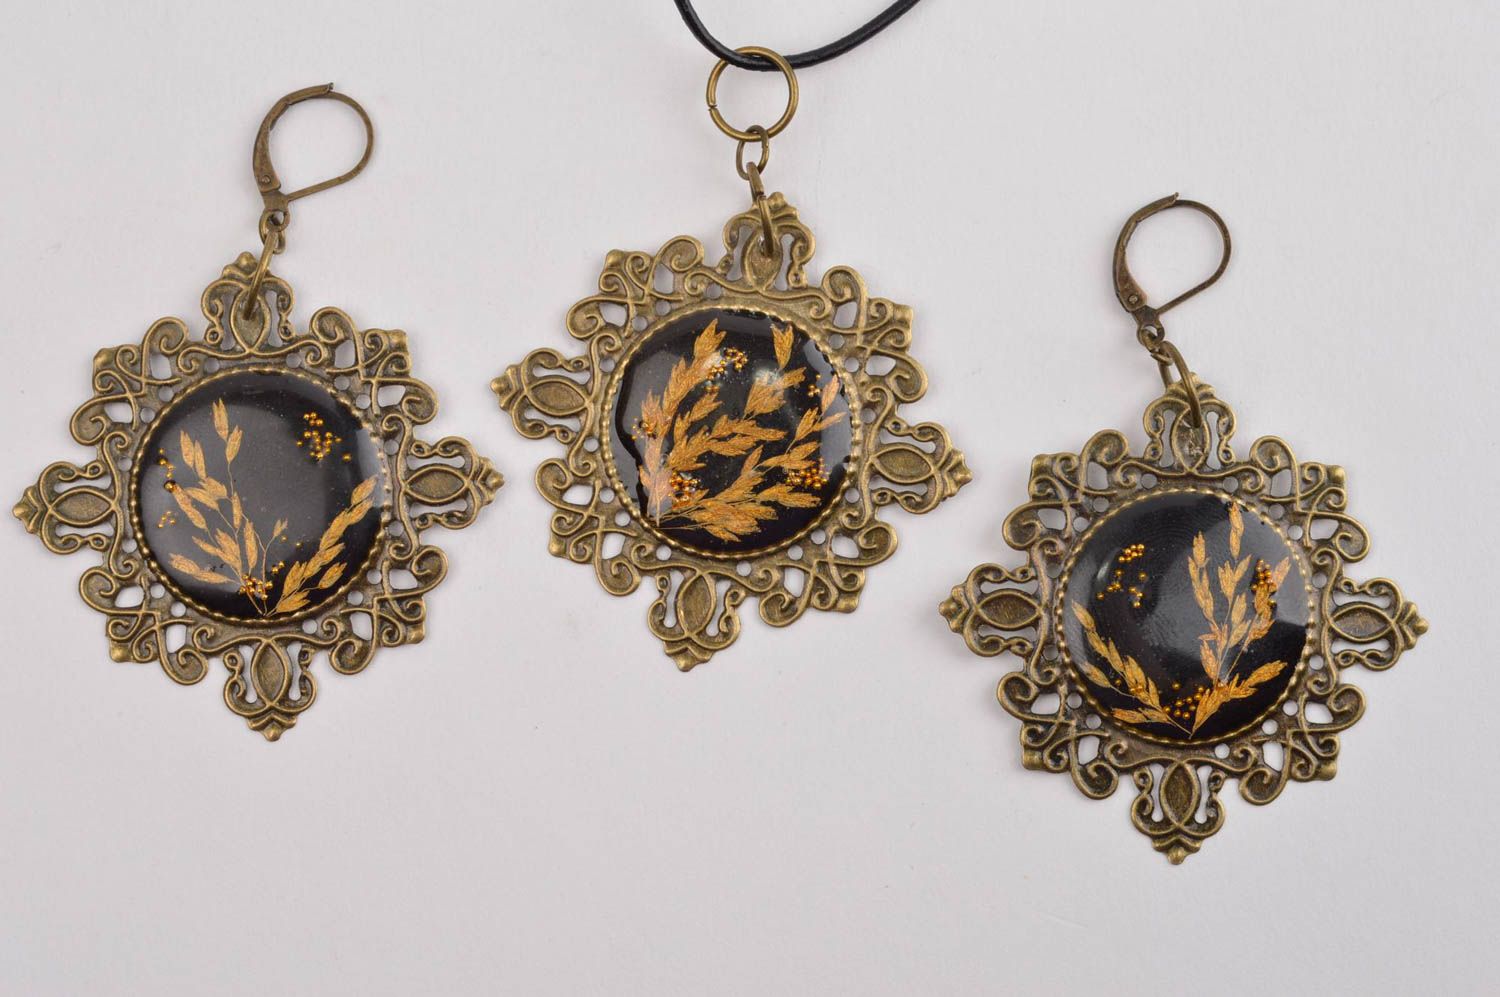 Handmade jewelry neck accessory unusual pendant epoxy resin jewelry gift ideas photo 2